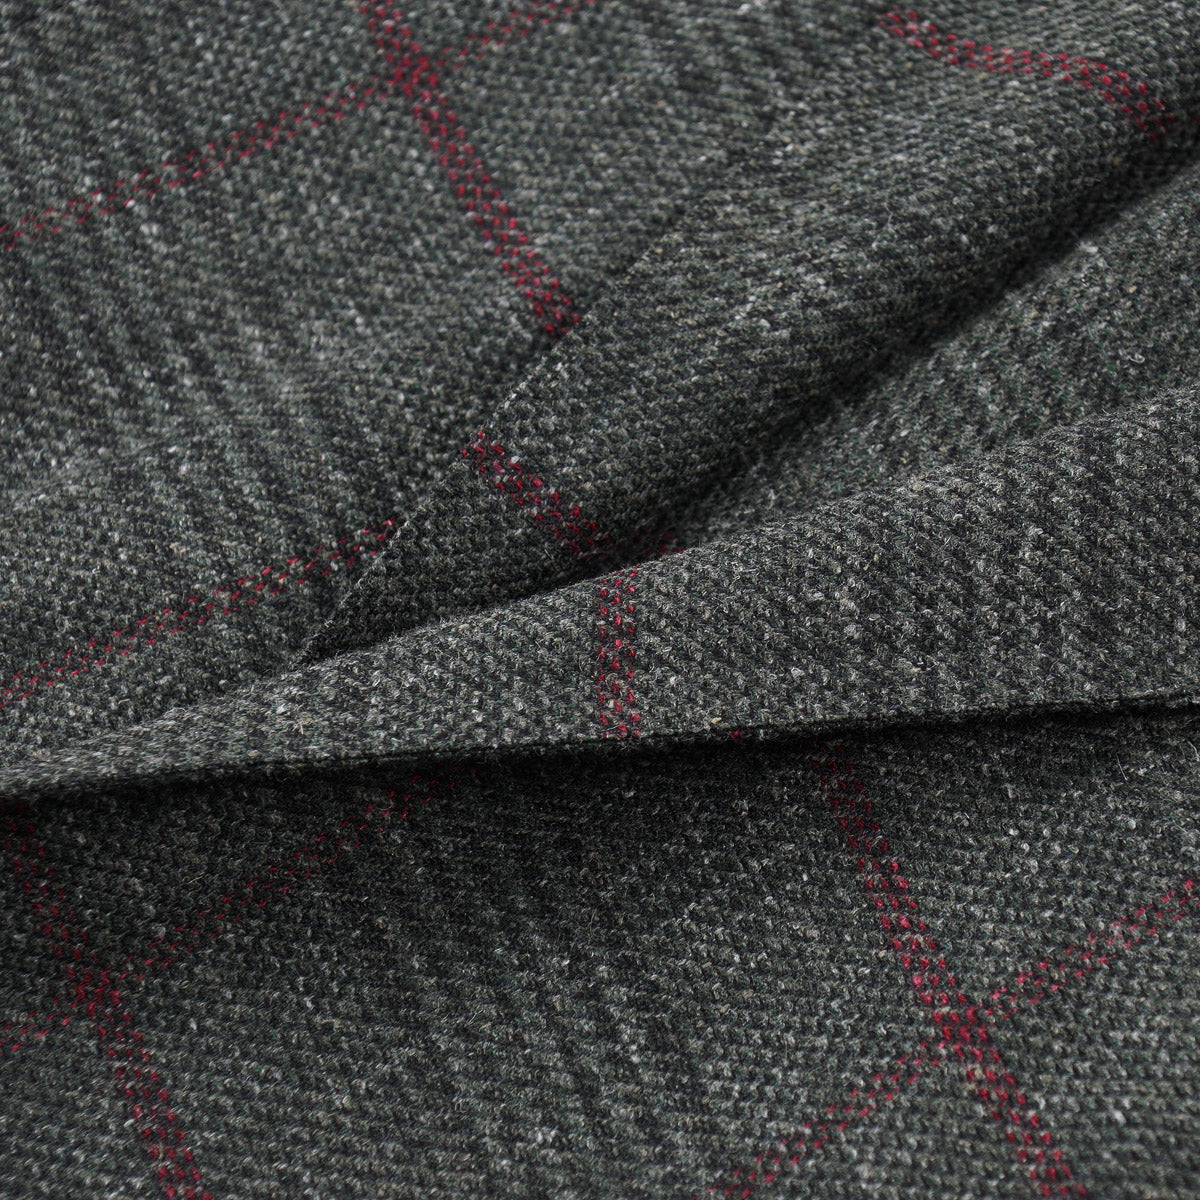 Sartorio Woven Wool-Linen Sport Coat - Top Shelf Apparel